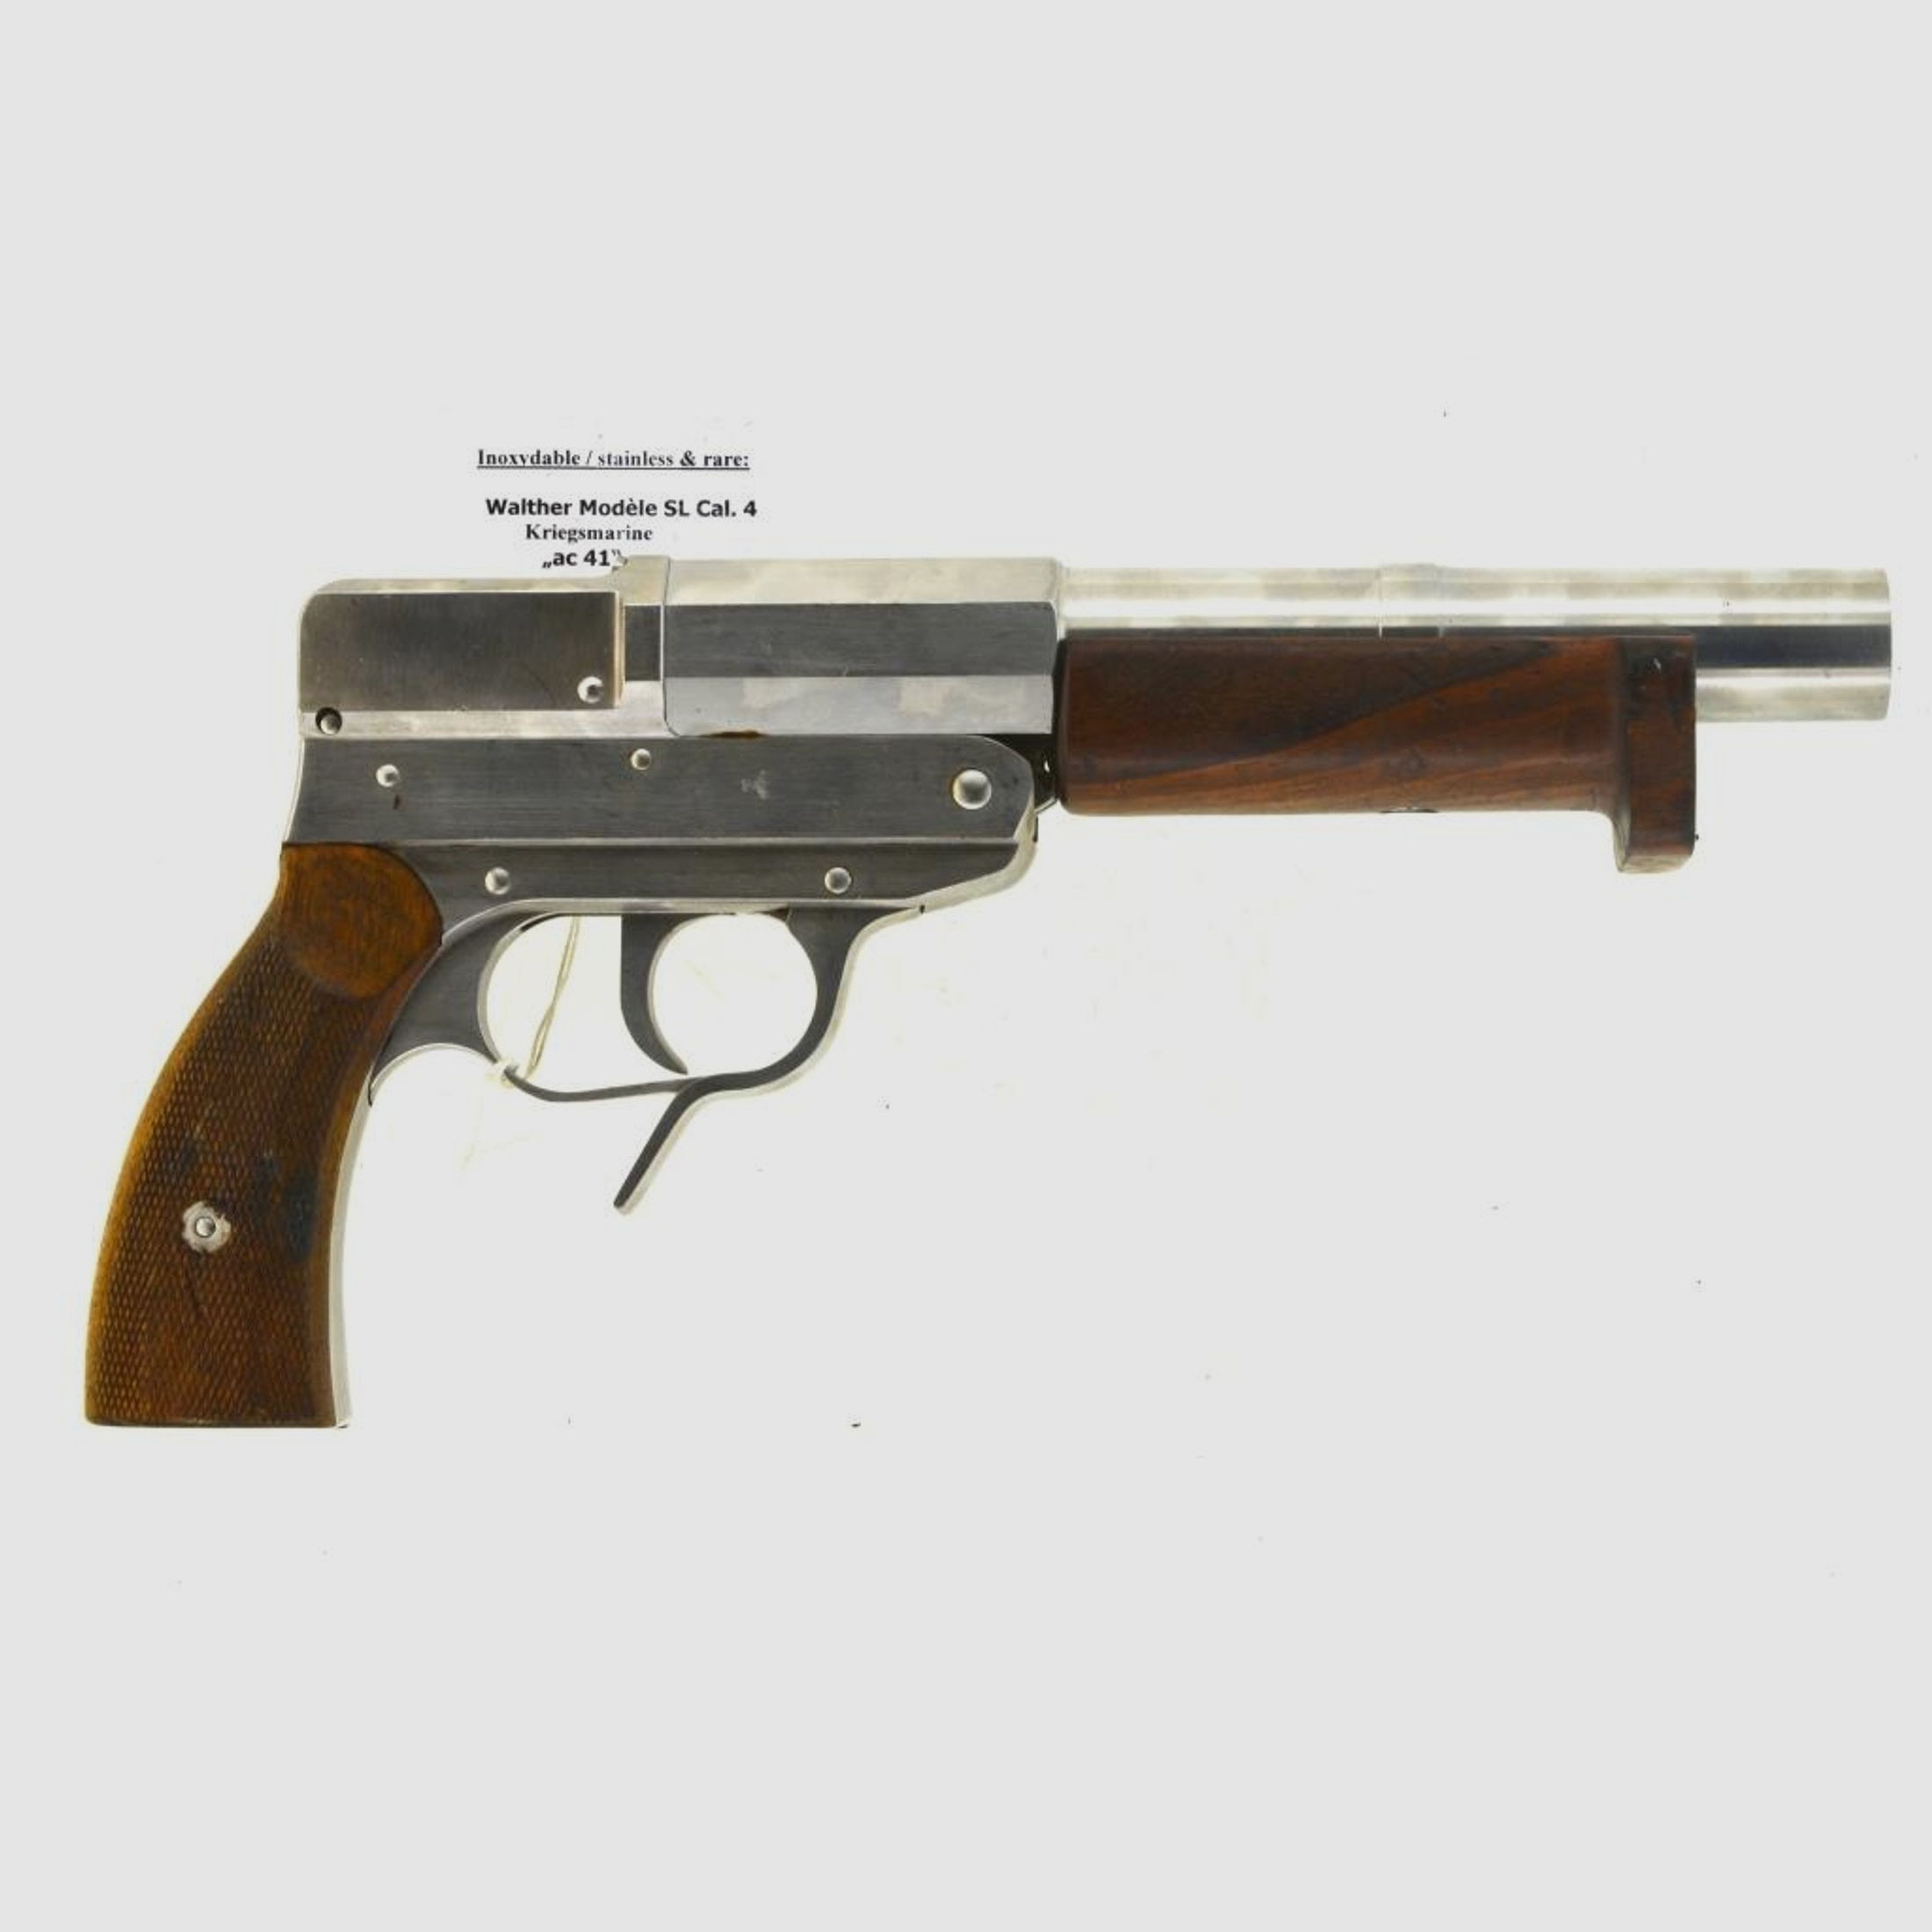 Signalpistole Walther "ac 41" Mod. SL